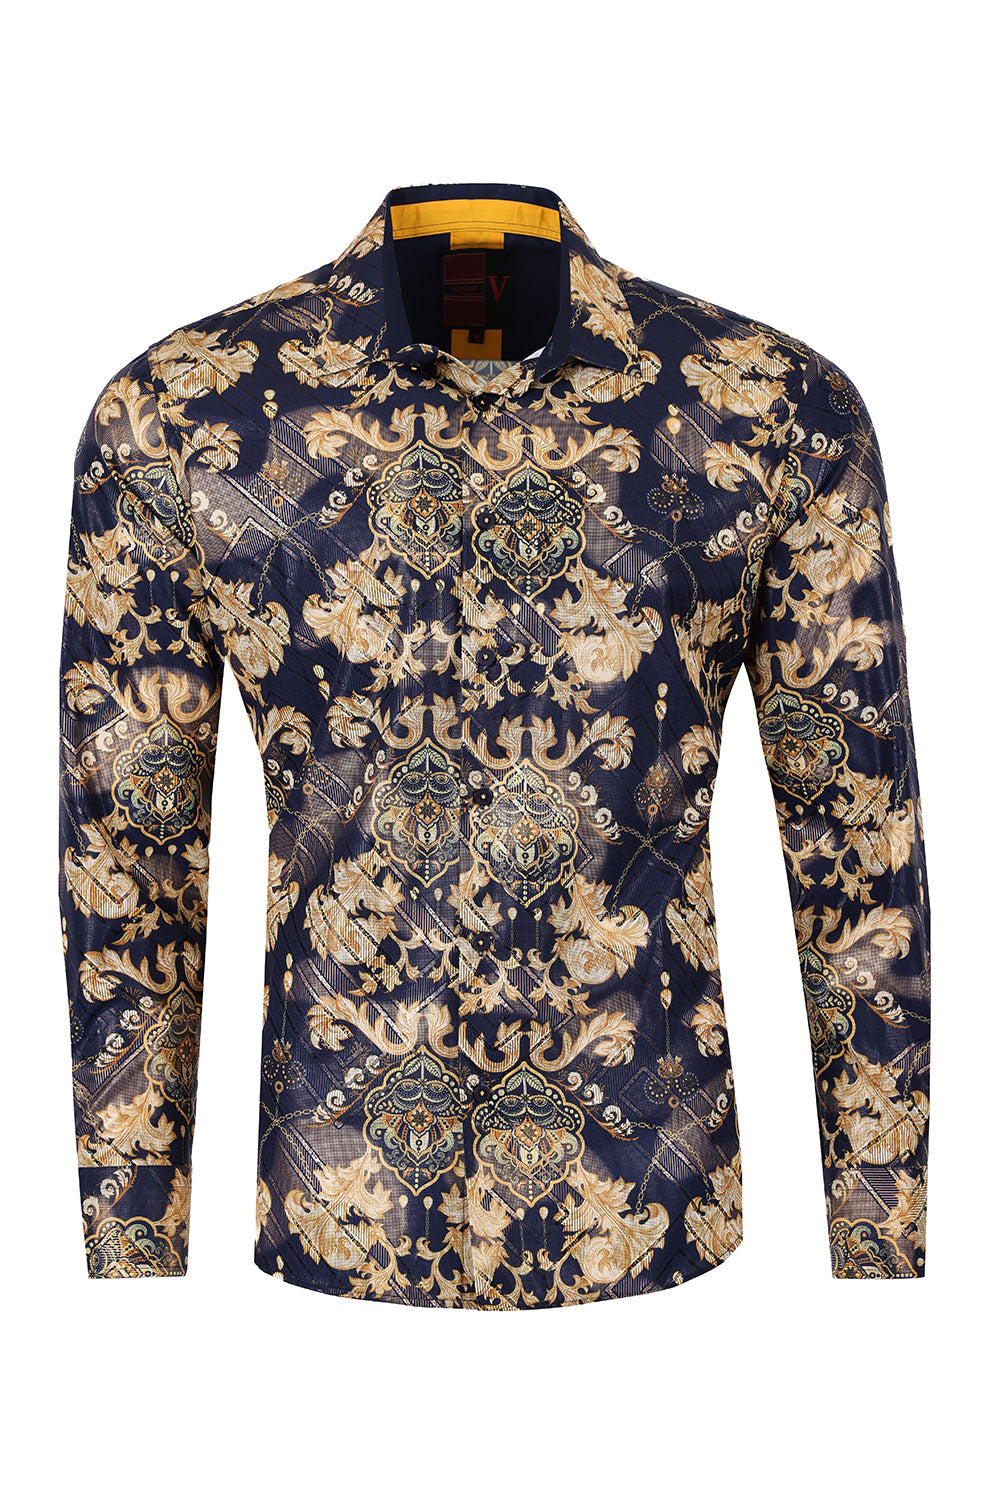 Vassari Mens Baroque Print Design Button Down Luxury Shirt  2VS158 Navy and Gold